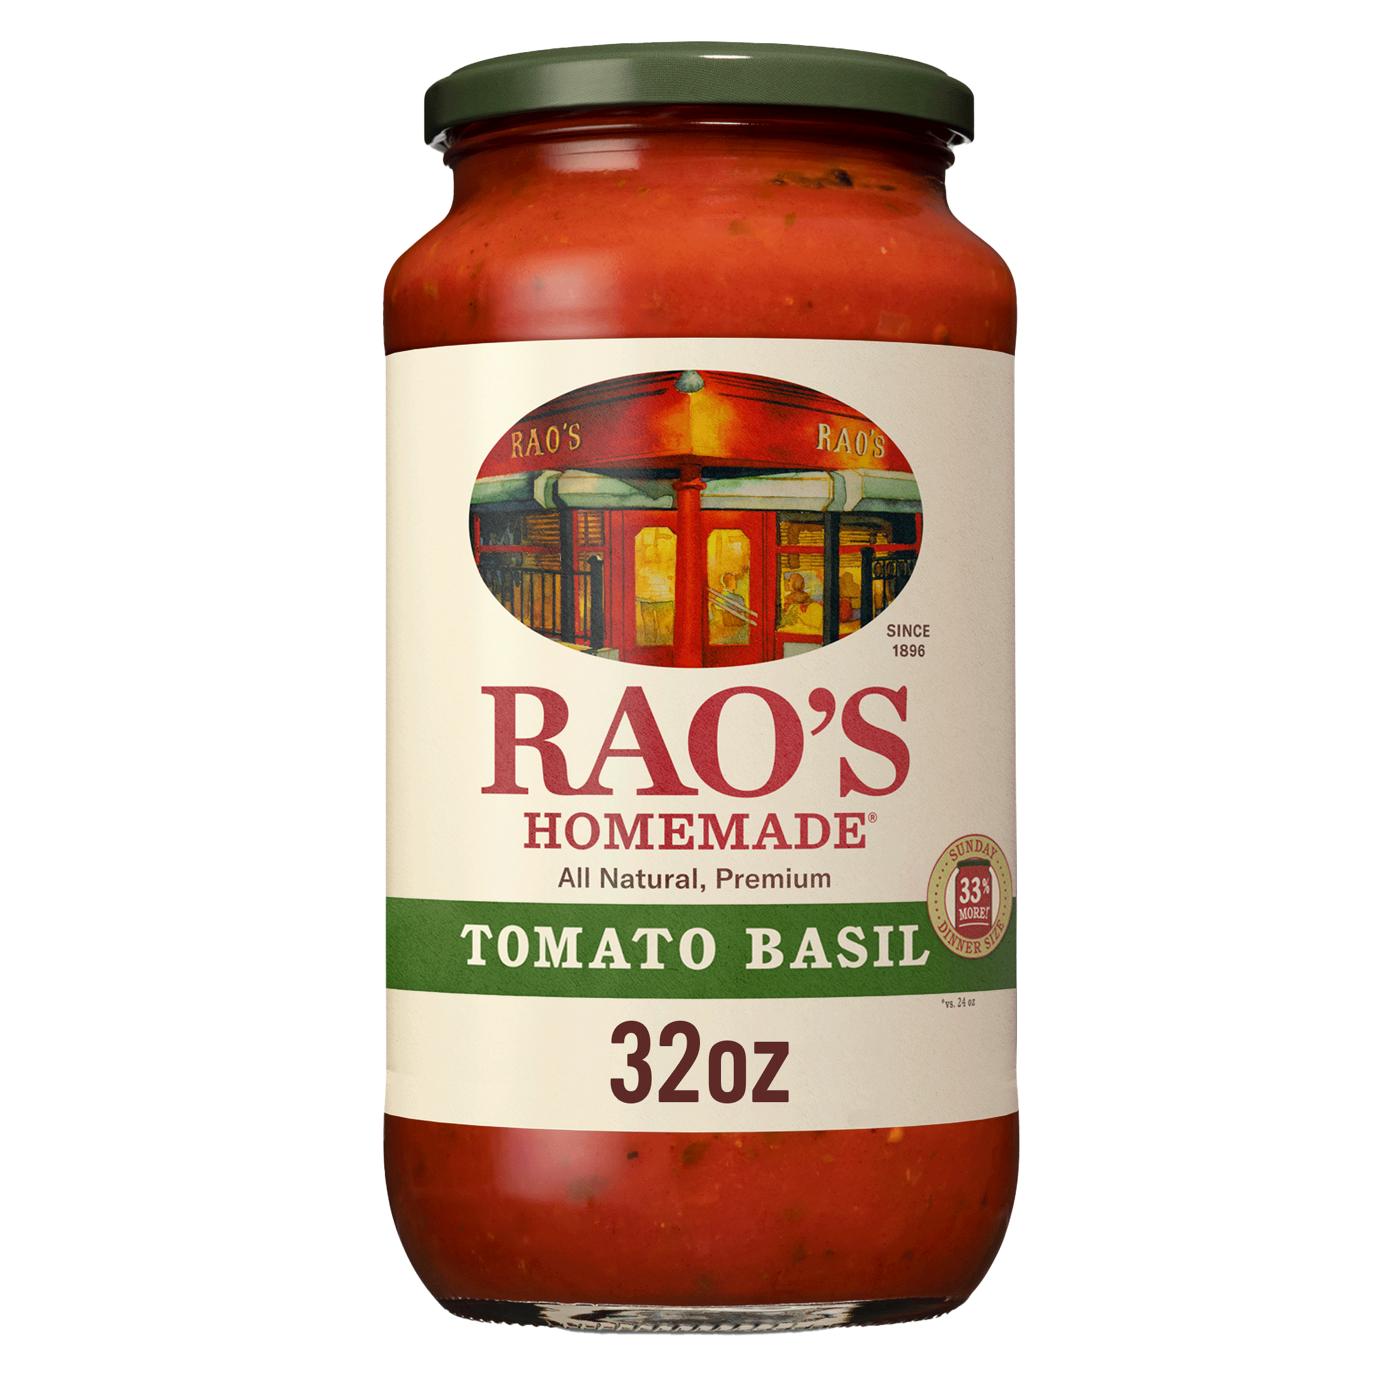 Rao's Homemade Tomato Basil Pasta Sauce; image 1 of 4